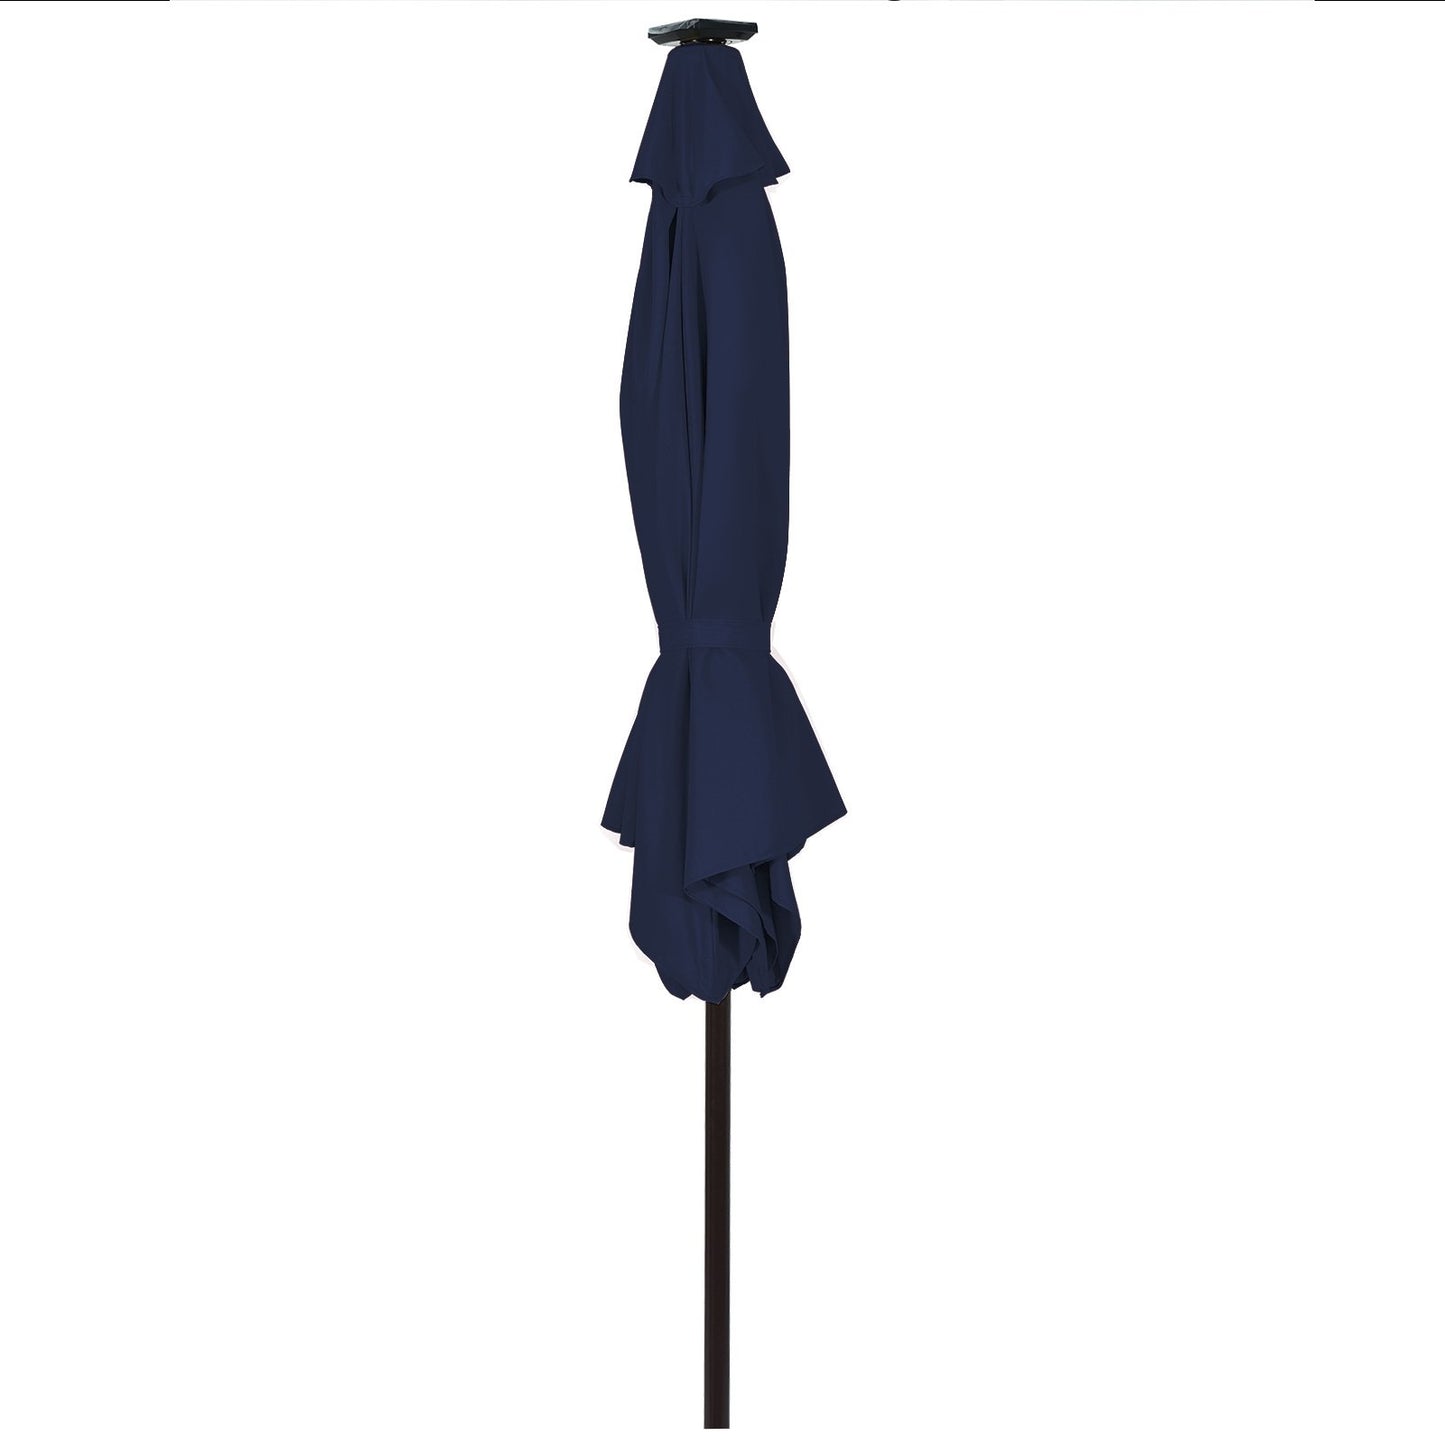 10 Feet Outdoor Patio umbrella with Bright Solar LED Lights, Dark Blue